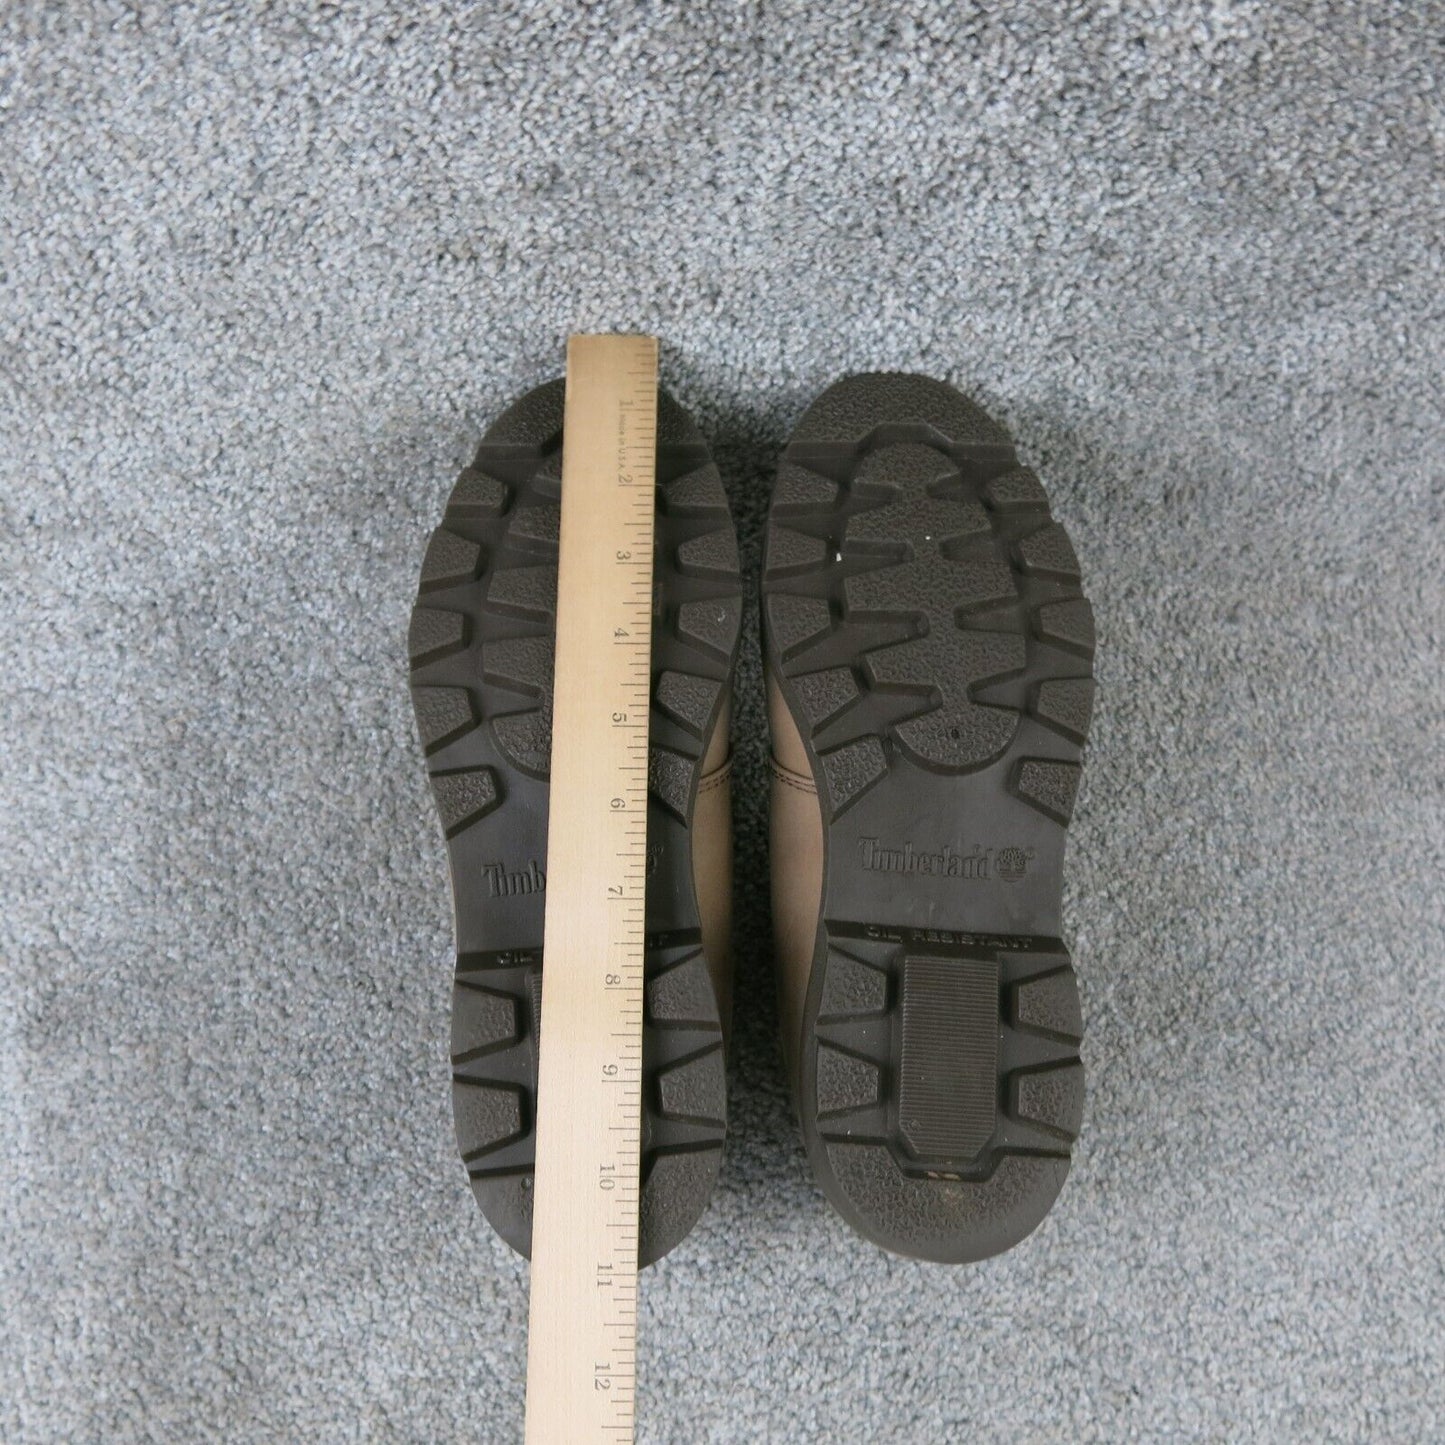 Timberland Mens Waterproof Low Chukka Boots Genuine Leather Tan Round Toe US 7M